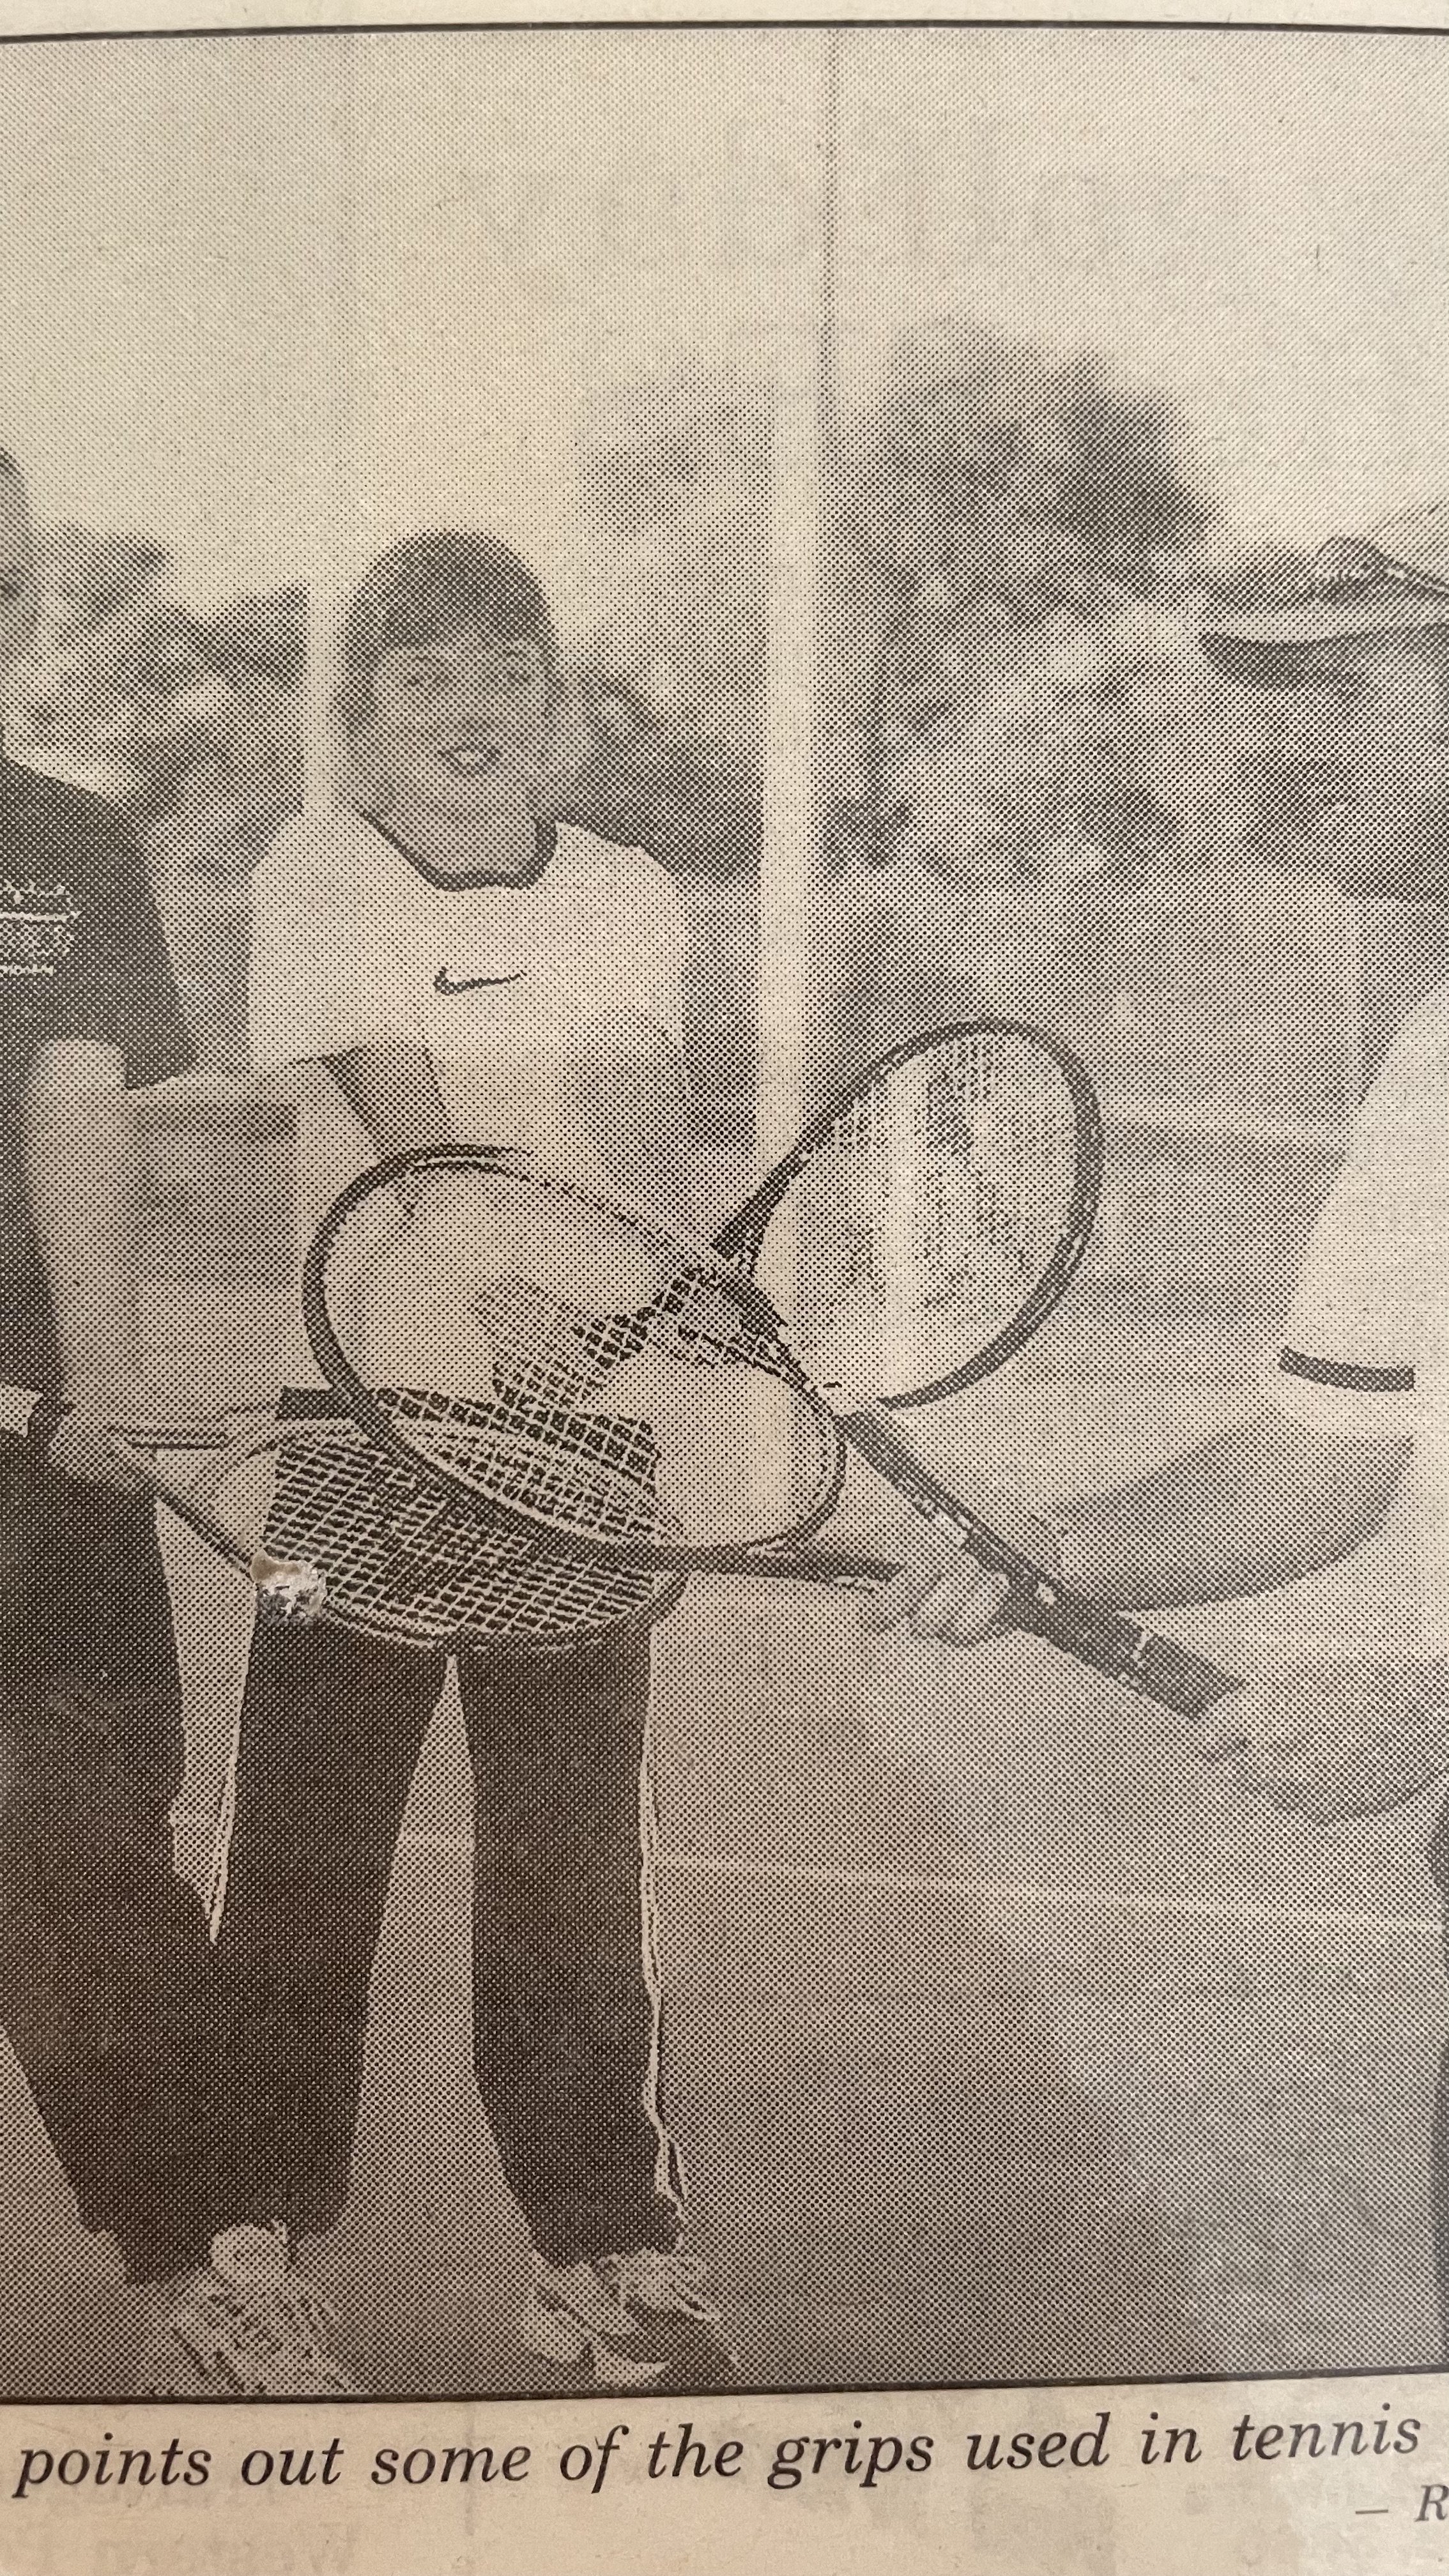 I began tennis at 6 years old.